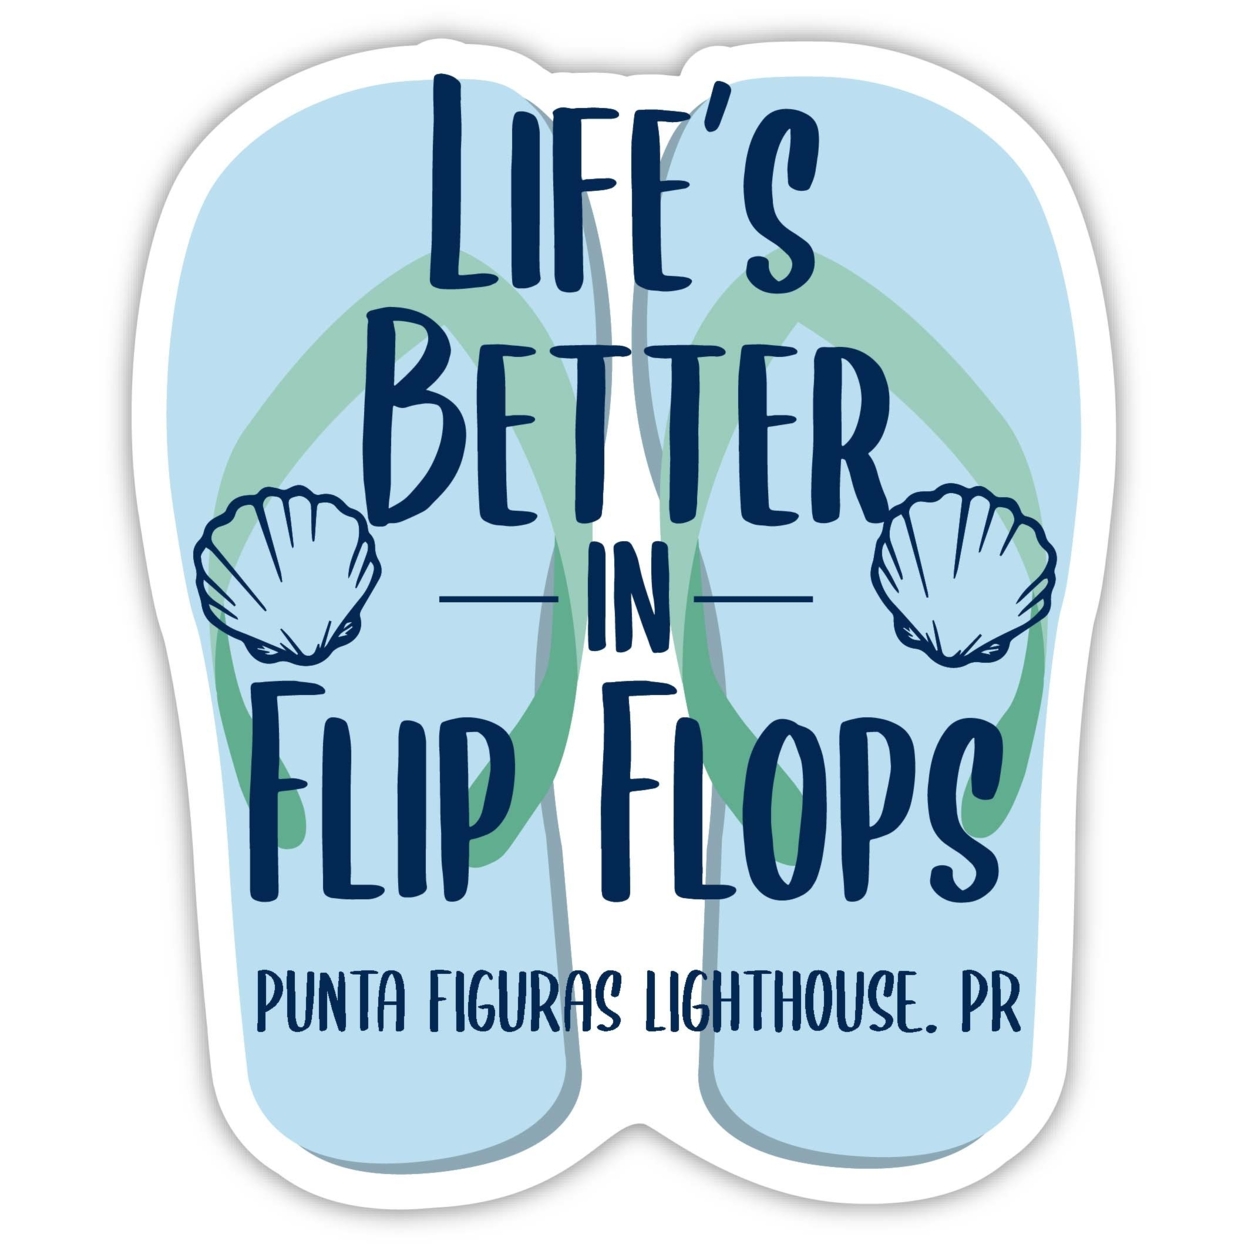 Punta Figuras Lighthouse Puerto Rico Souvenir 4 Inch Vinyl Decal Sticker Flip Flop Design